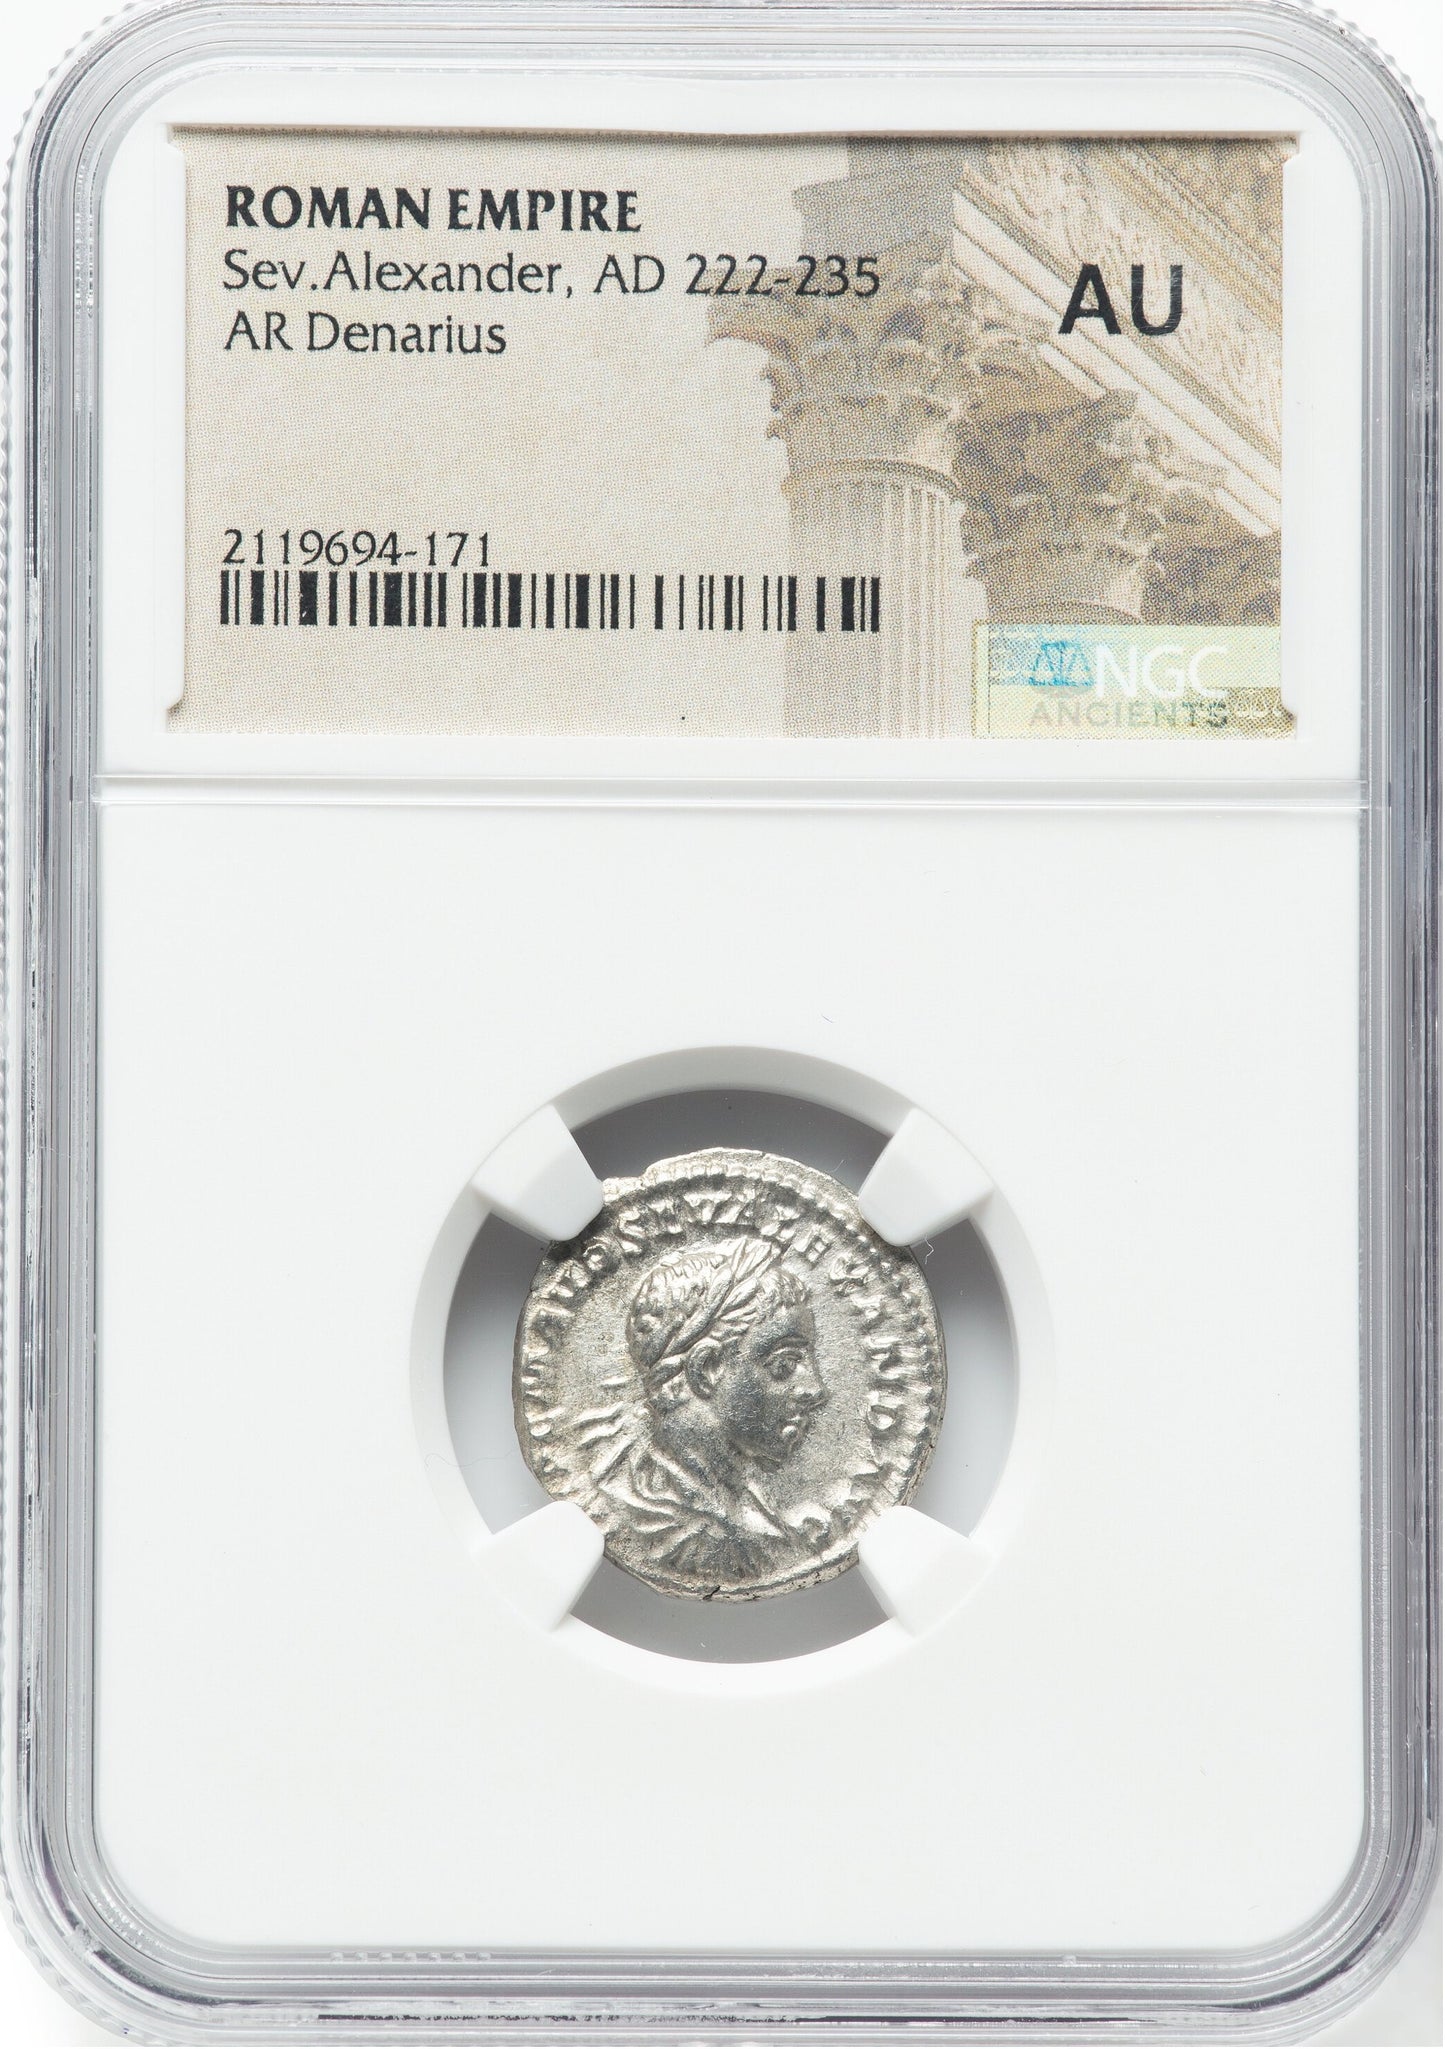 Roman Empire - Severus Alexander - Silver Denarius - NGC AU - RIC:7